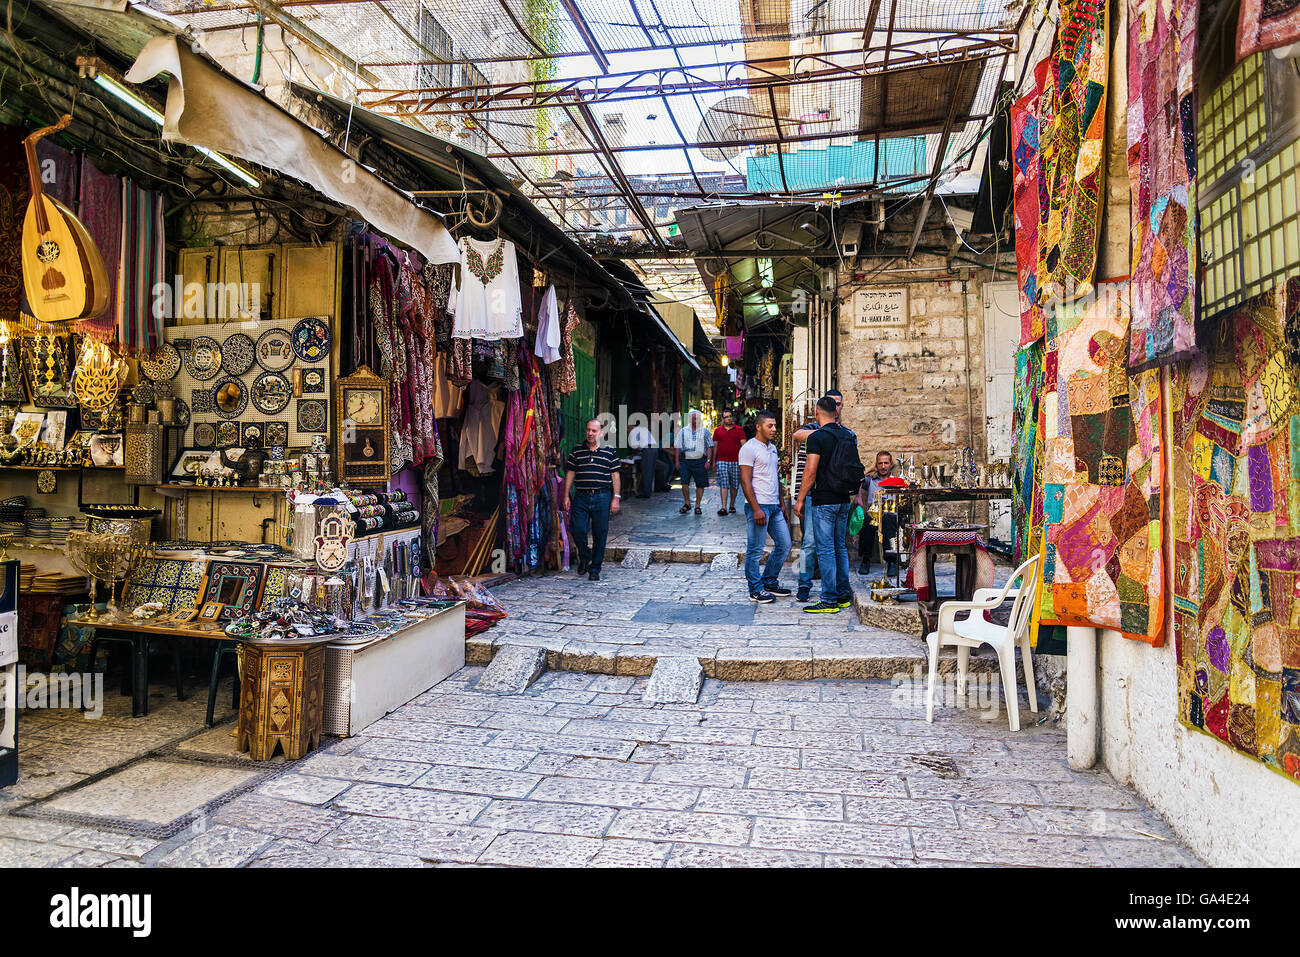 Il souk palestinese Bazar Market street bancarelle negozi in Gerusalemme città vecchia Israele Foto Stock